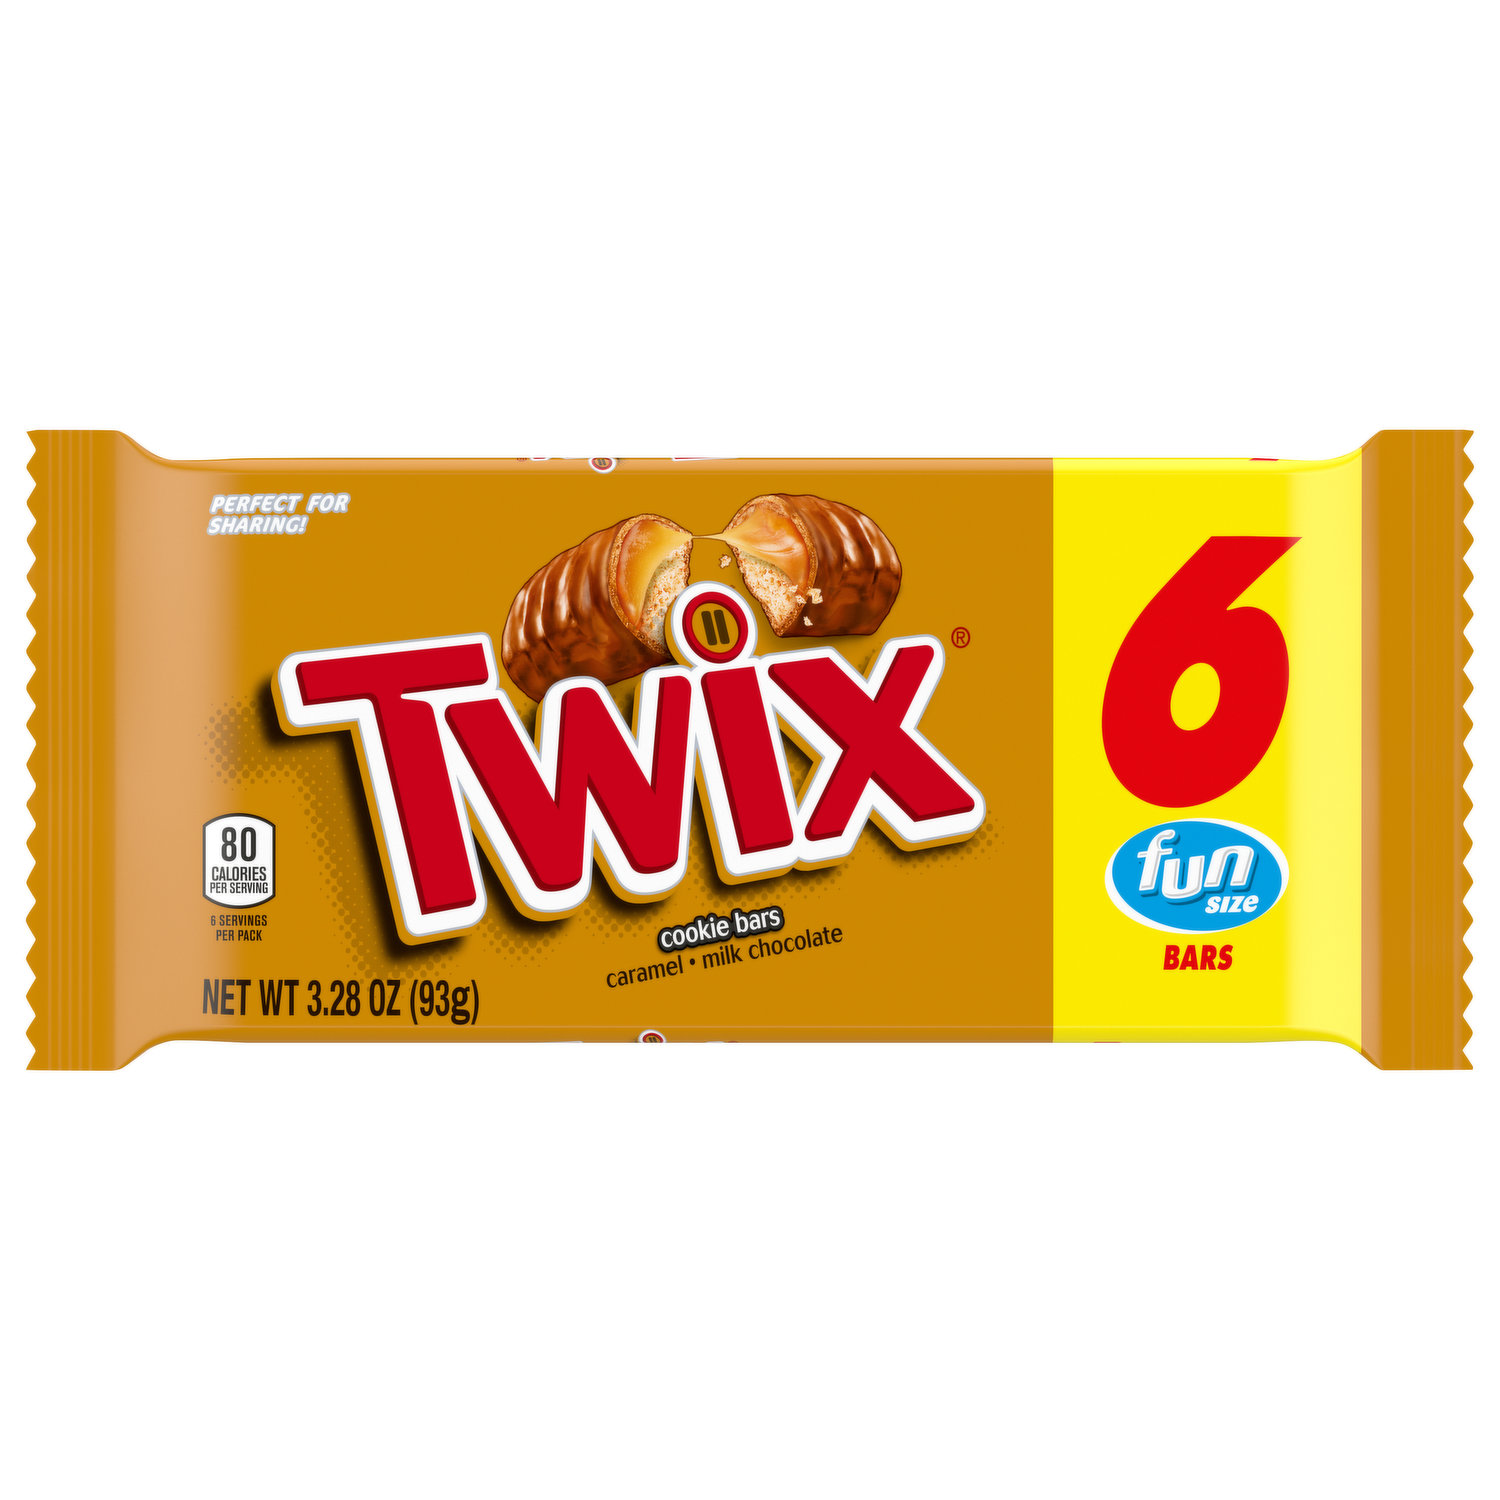 TWIX Cookie Dough Full Size Candy Bar 1.36oz